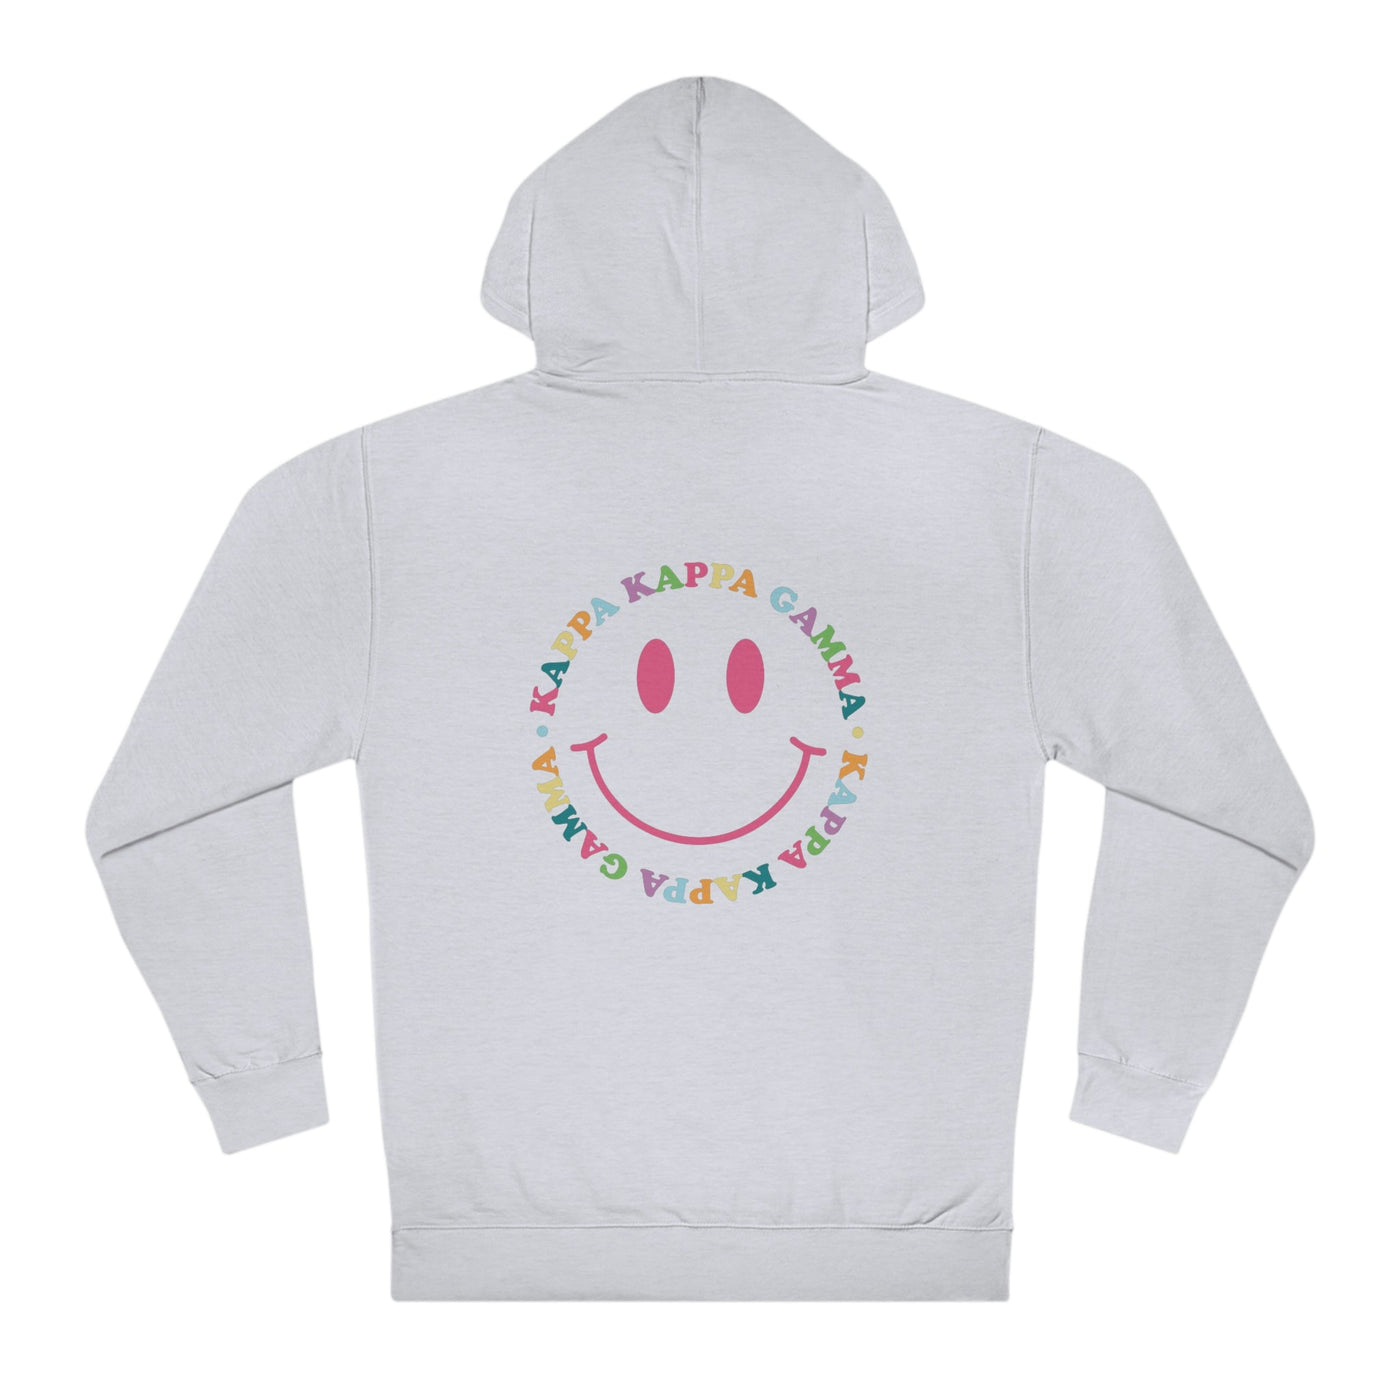 Kappa Kappa Gamma Colorful Smiley Sweatshirt KKG Sorority Hoodie